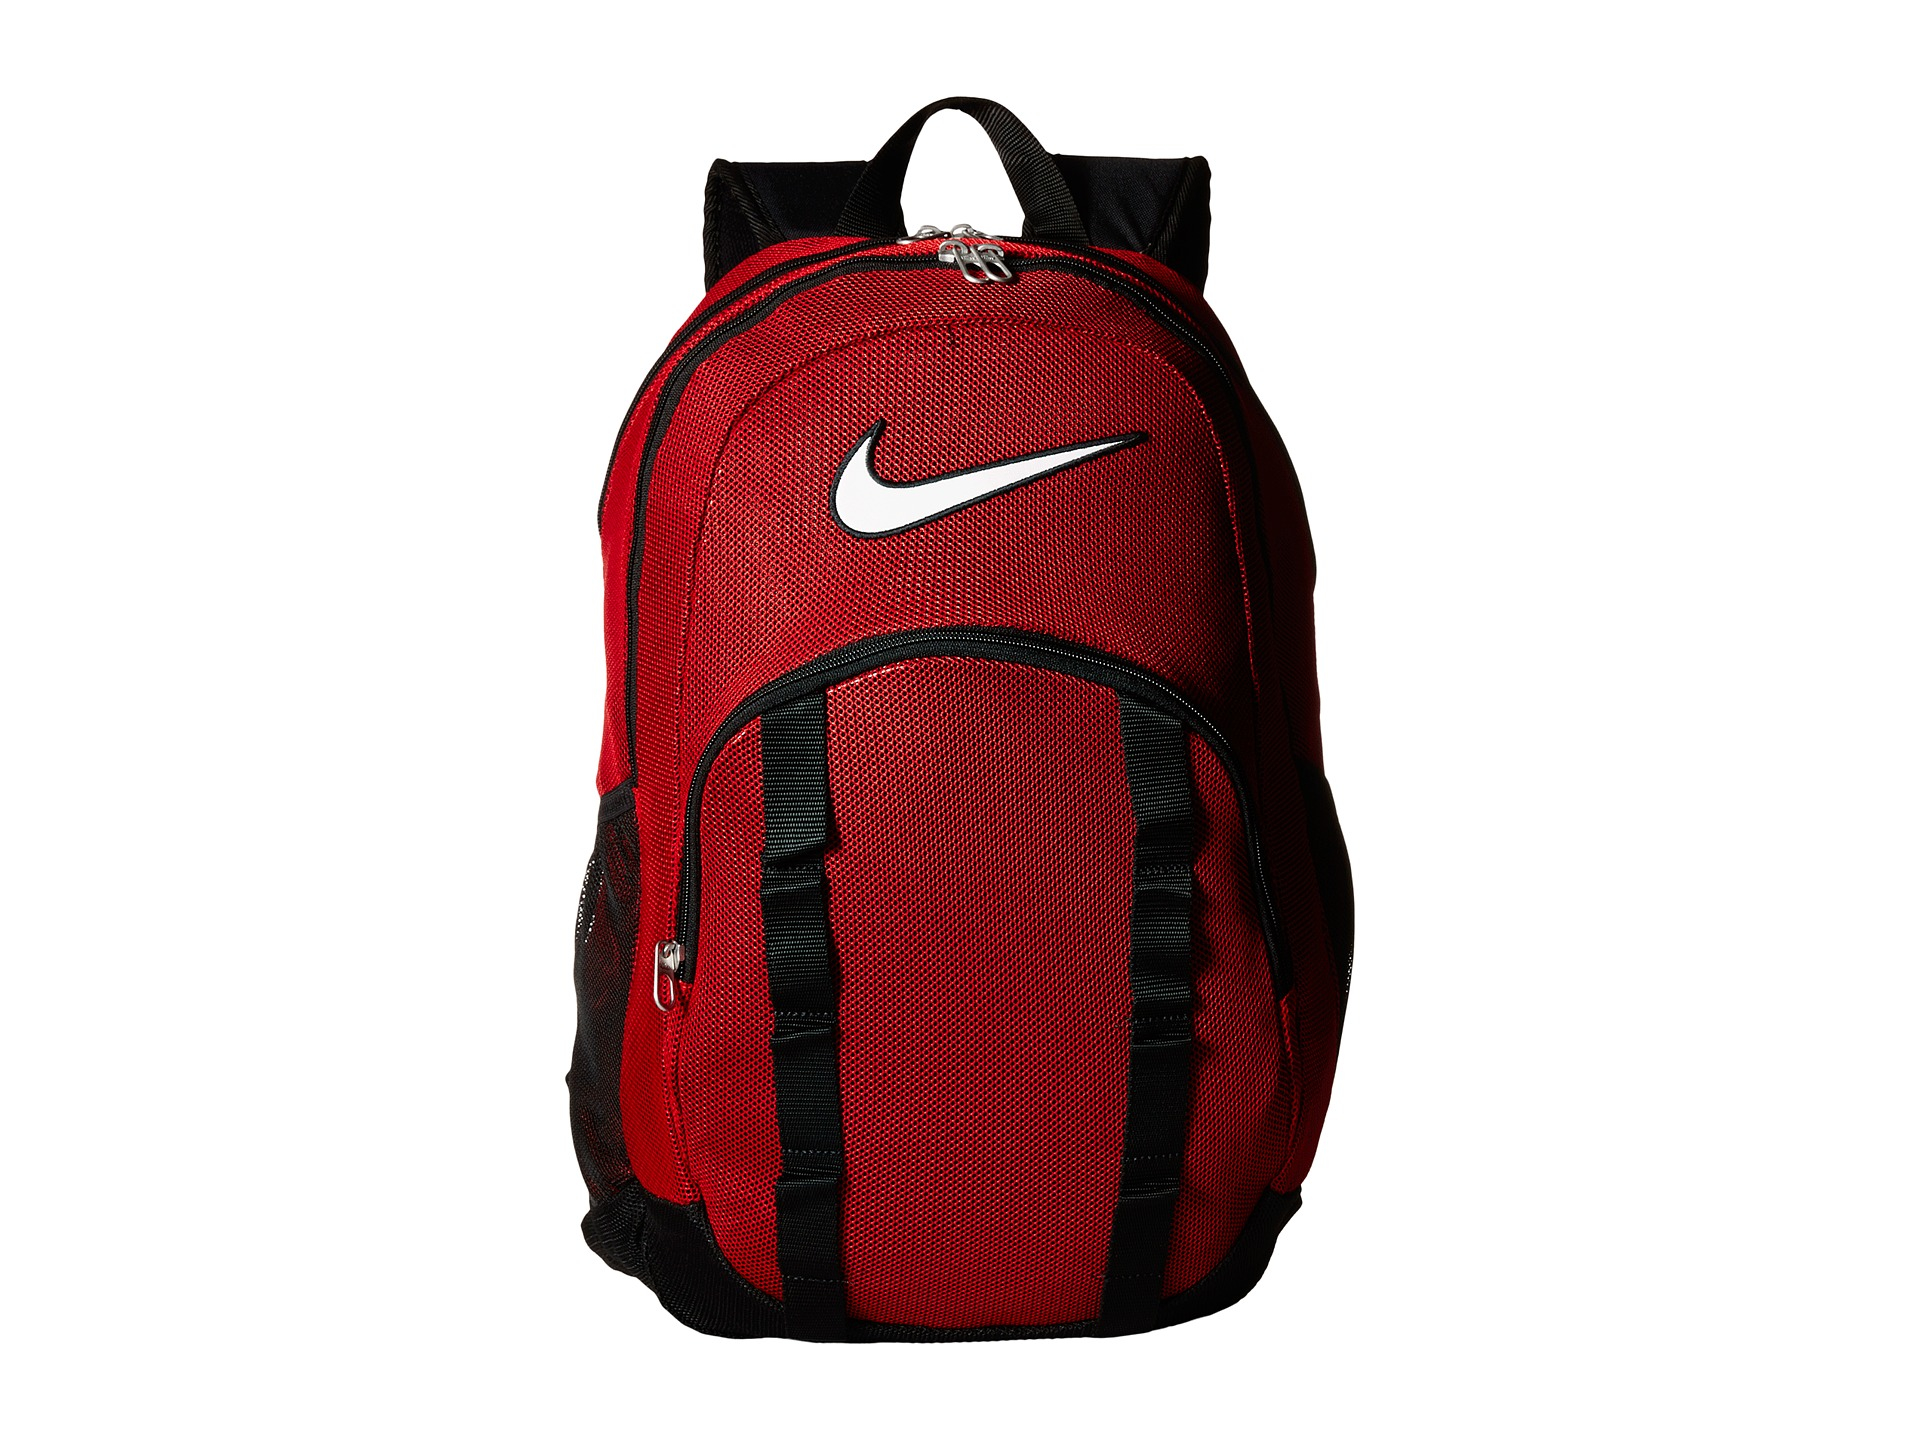 red and black nike backpack